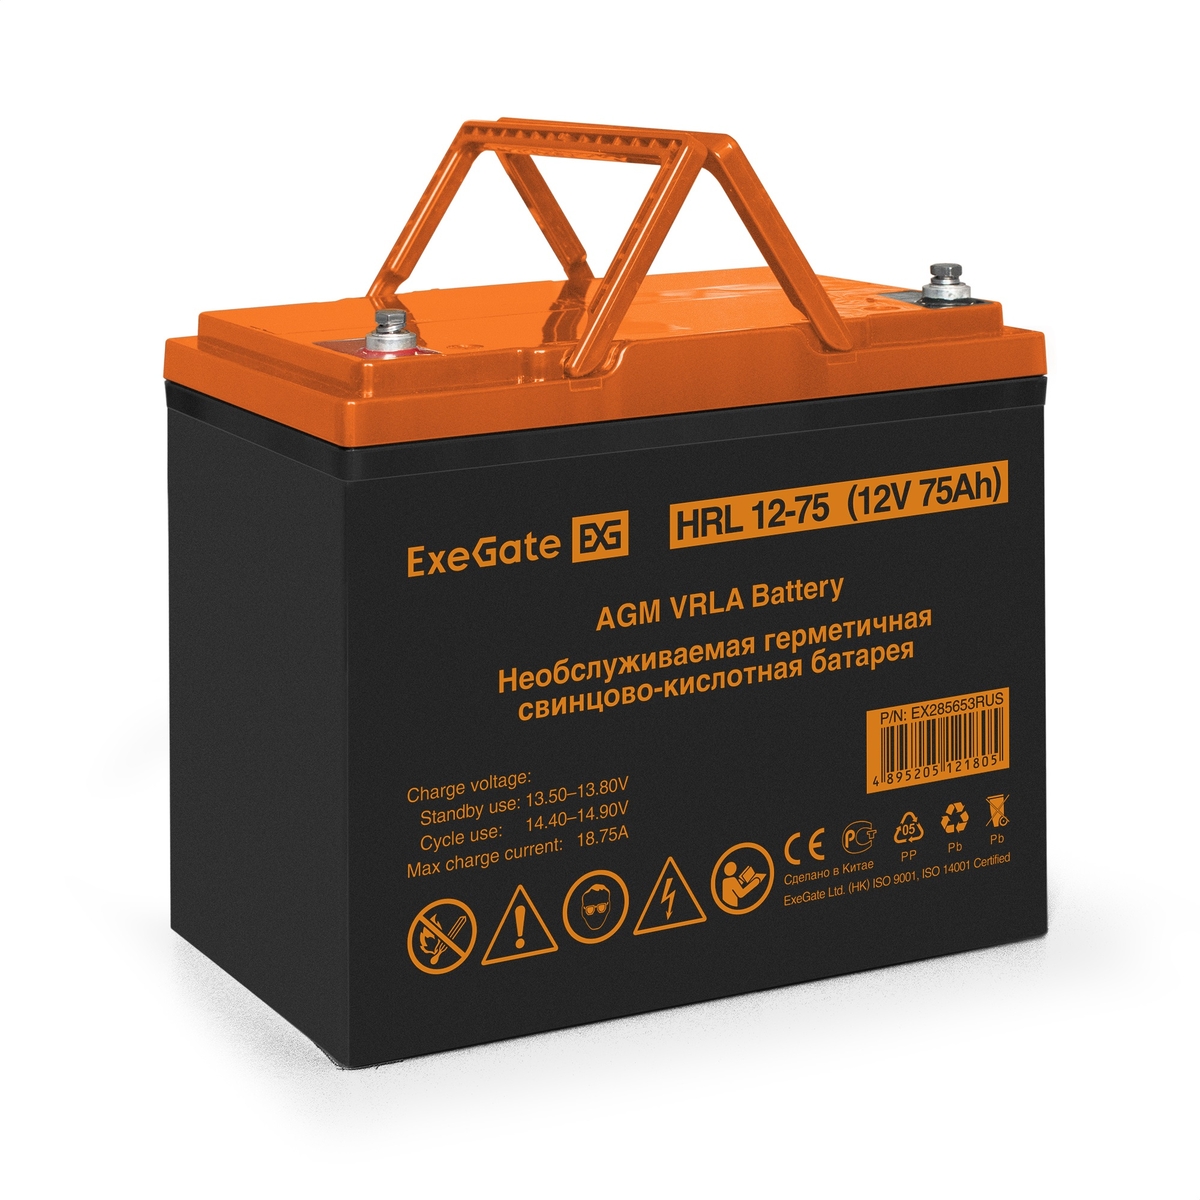 UPS set EX295995 + battery 75Ah EX285653 1 piece